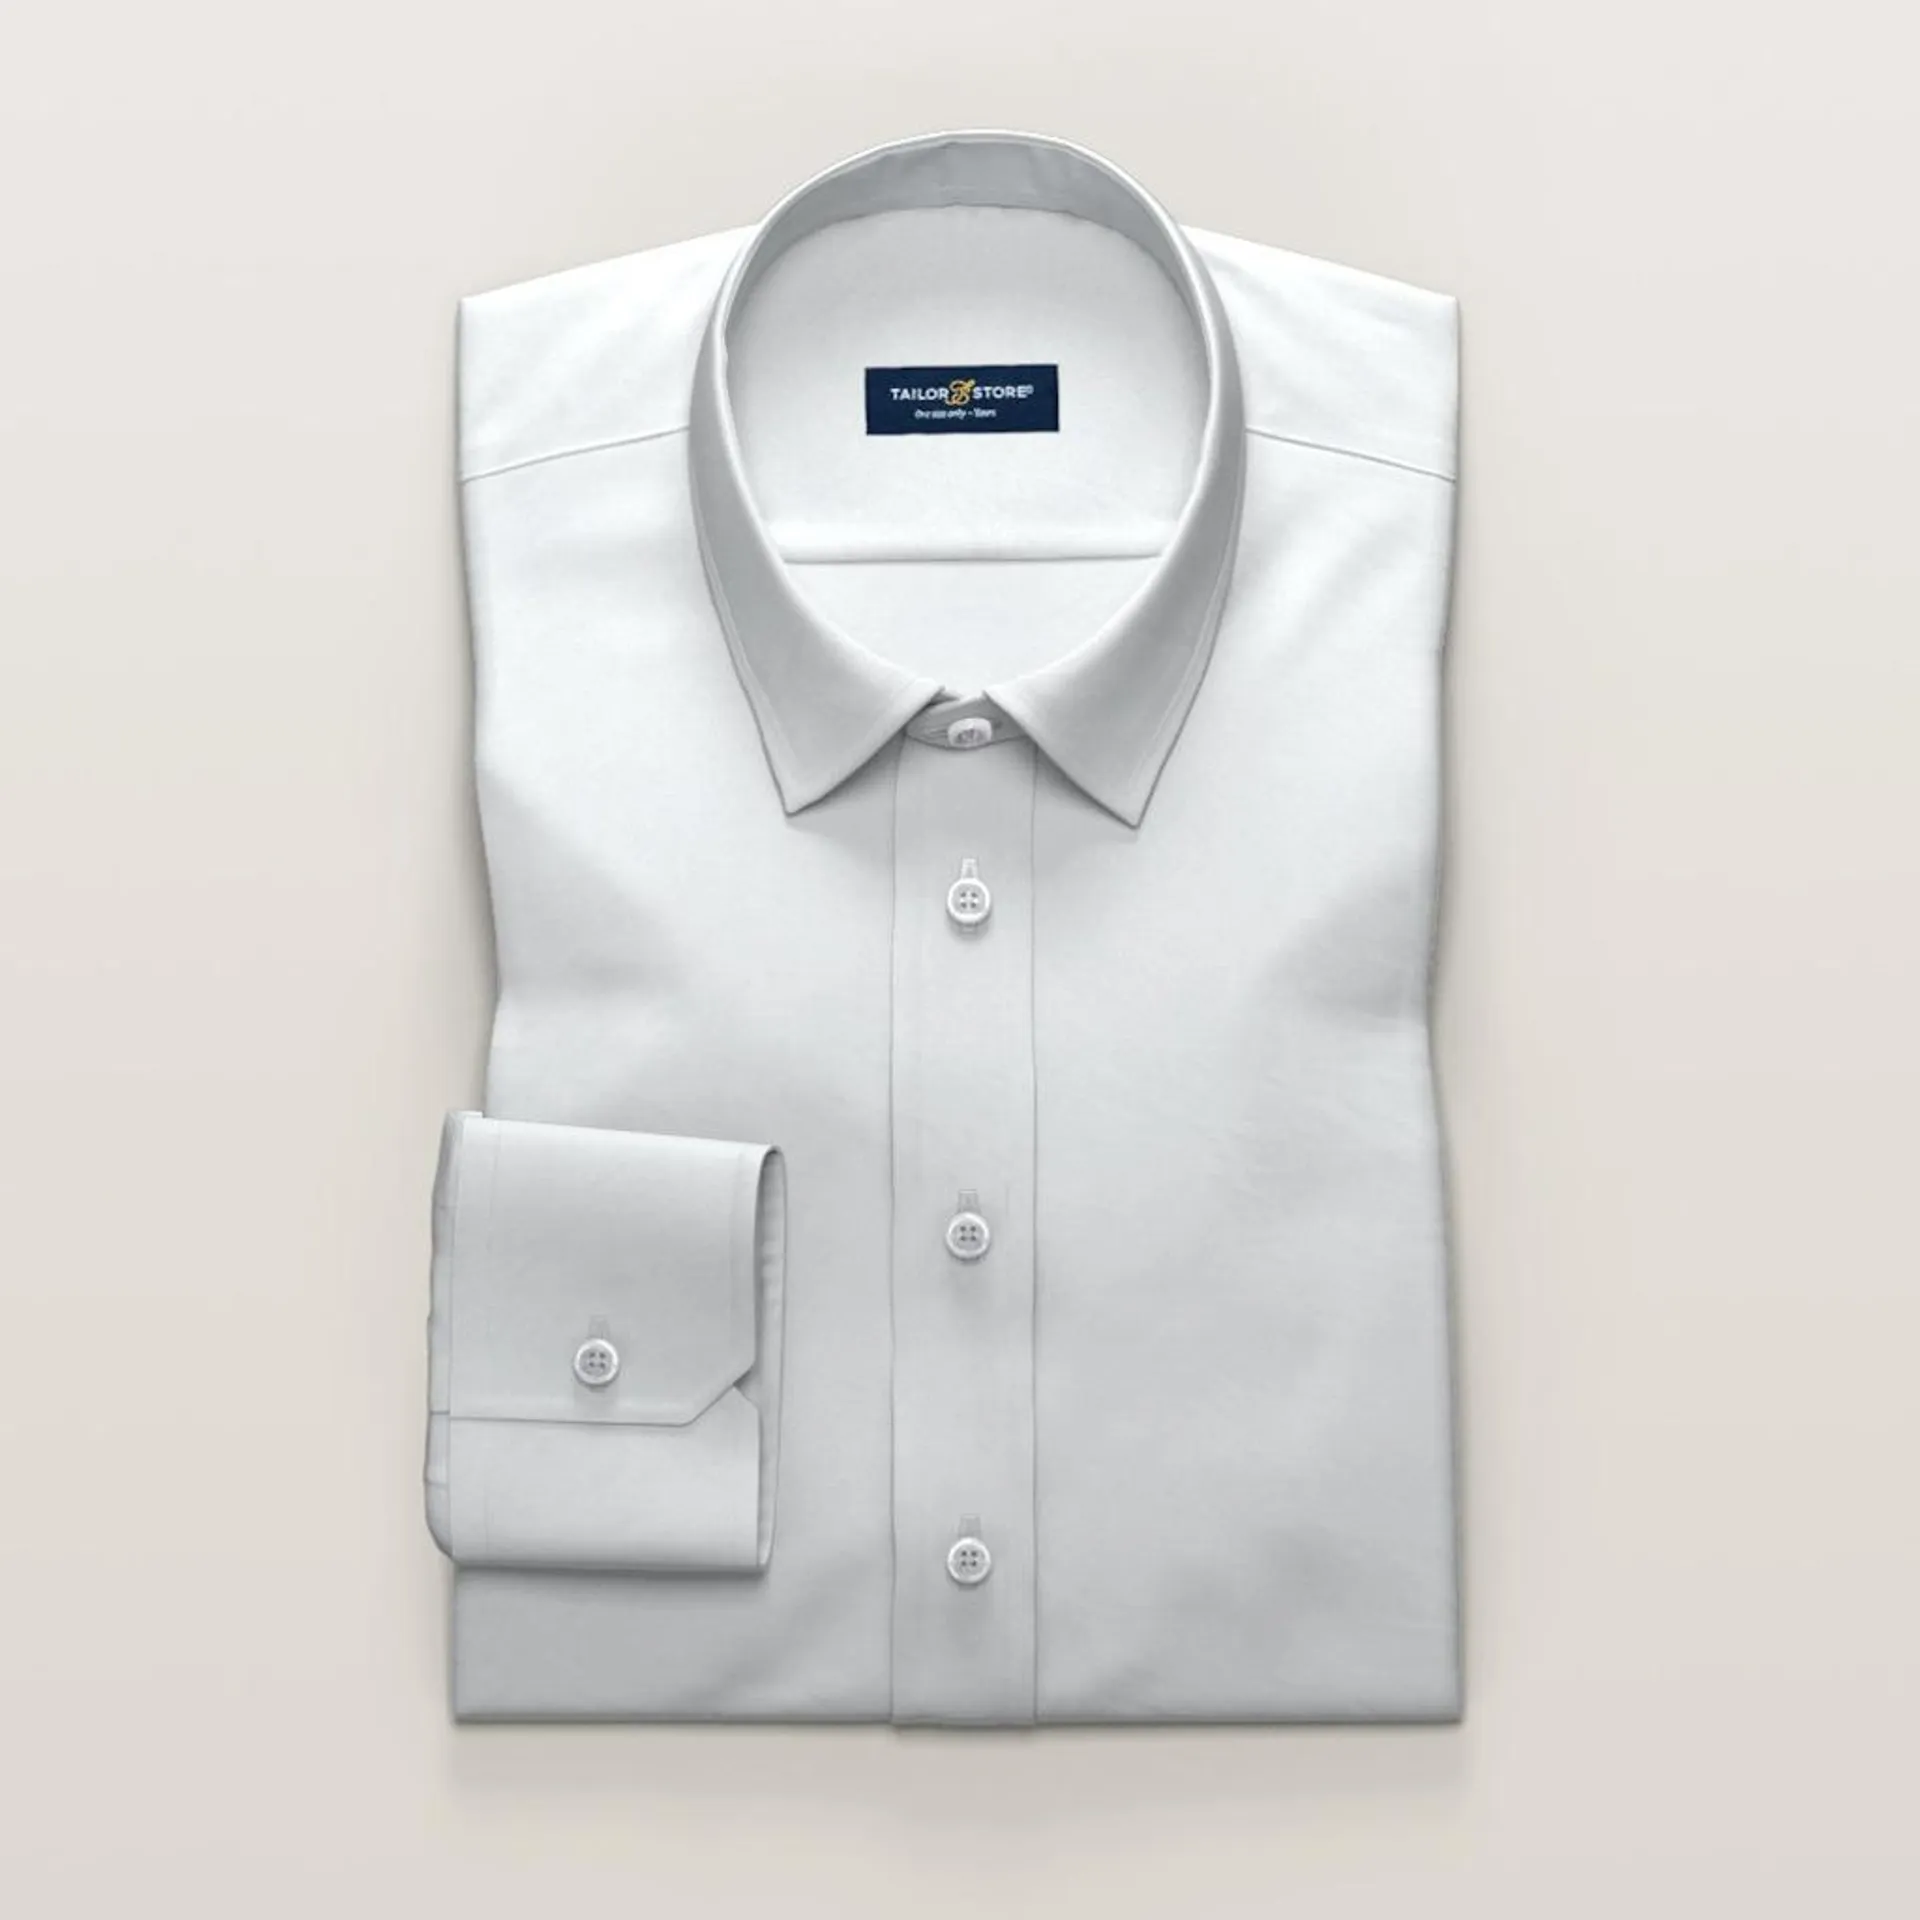 White business shirt